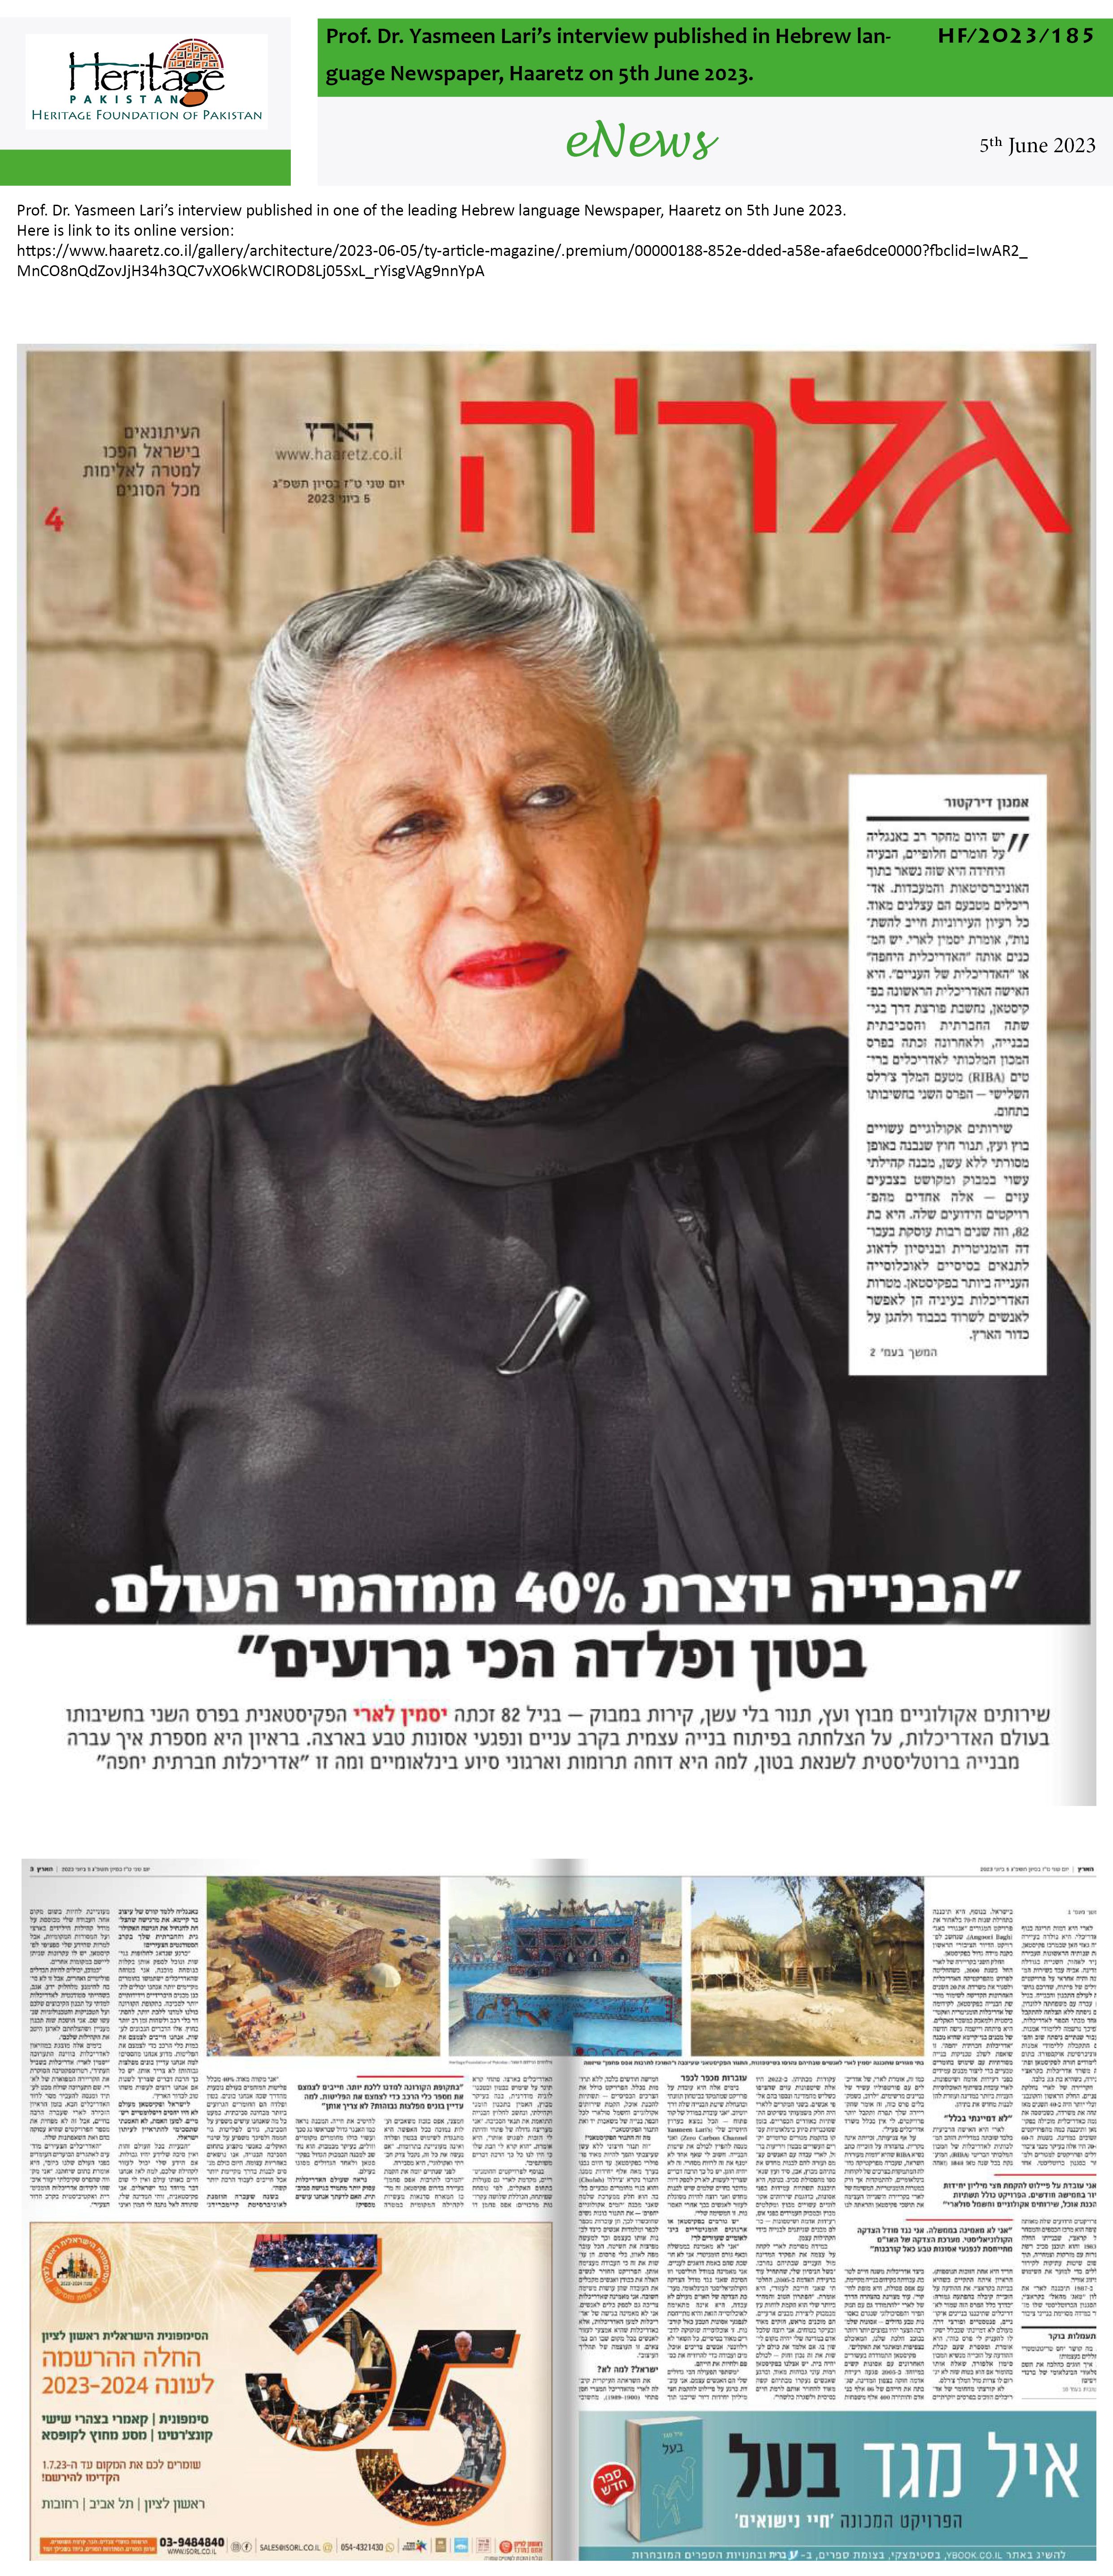 Prof. Dr. Yasmeen Lari’s interview published in Hebrew language Newspaper, Haaretz on 5th June 2023.